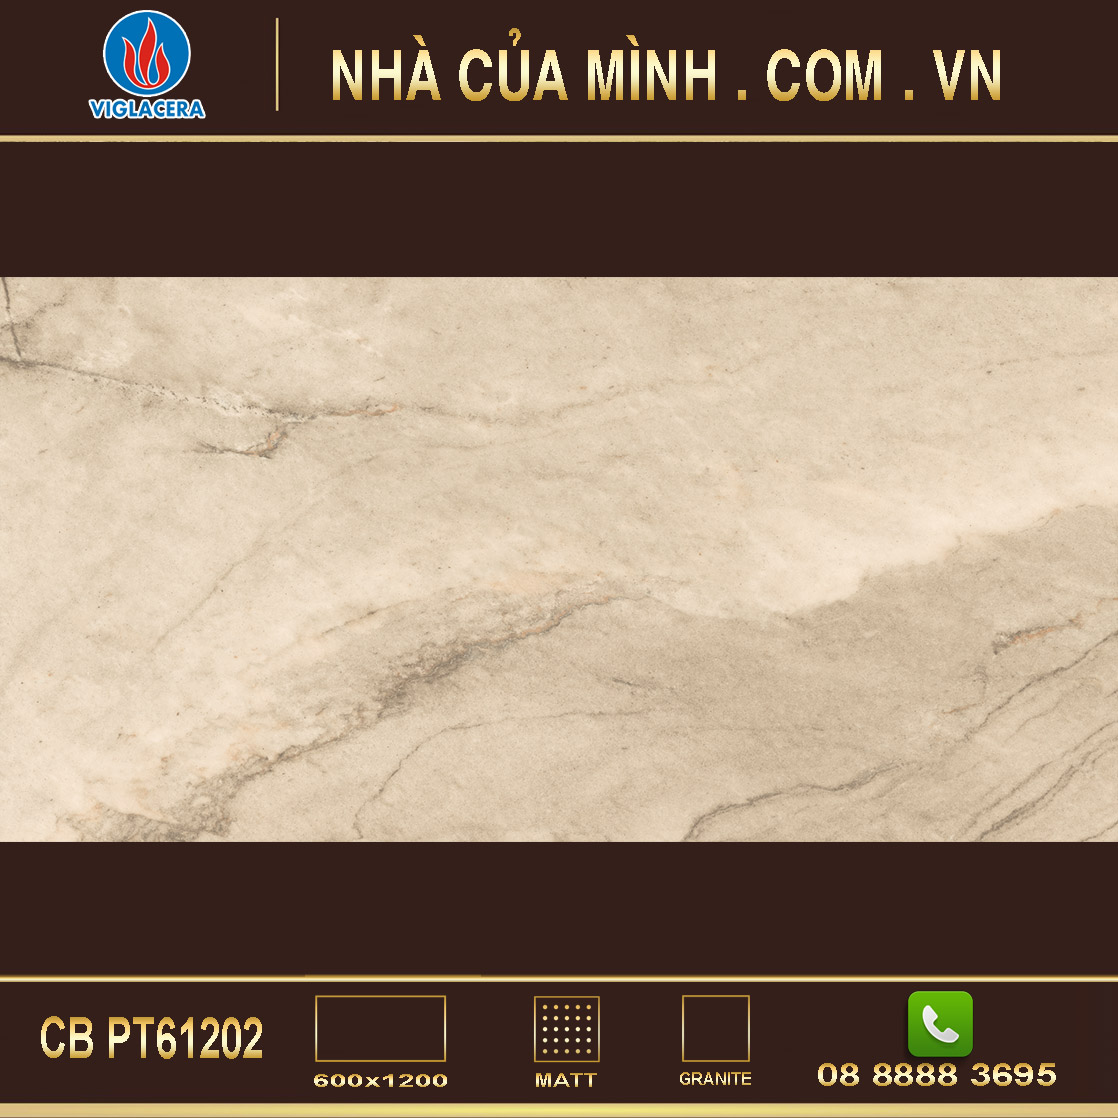 Gạch granite đồng chất Viglacera CB PT61202 cao cấp